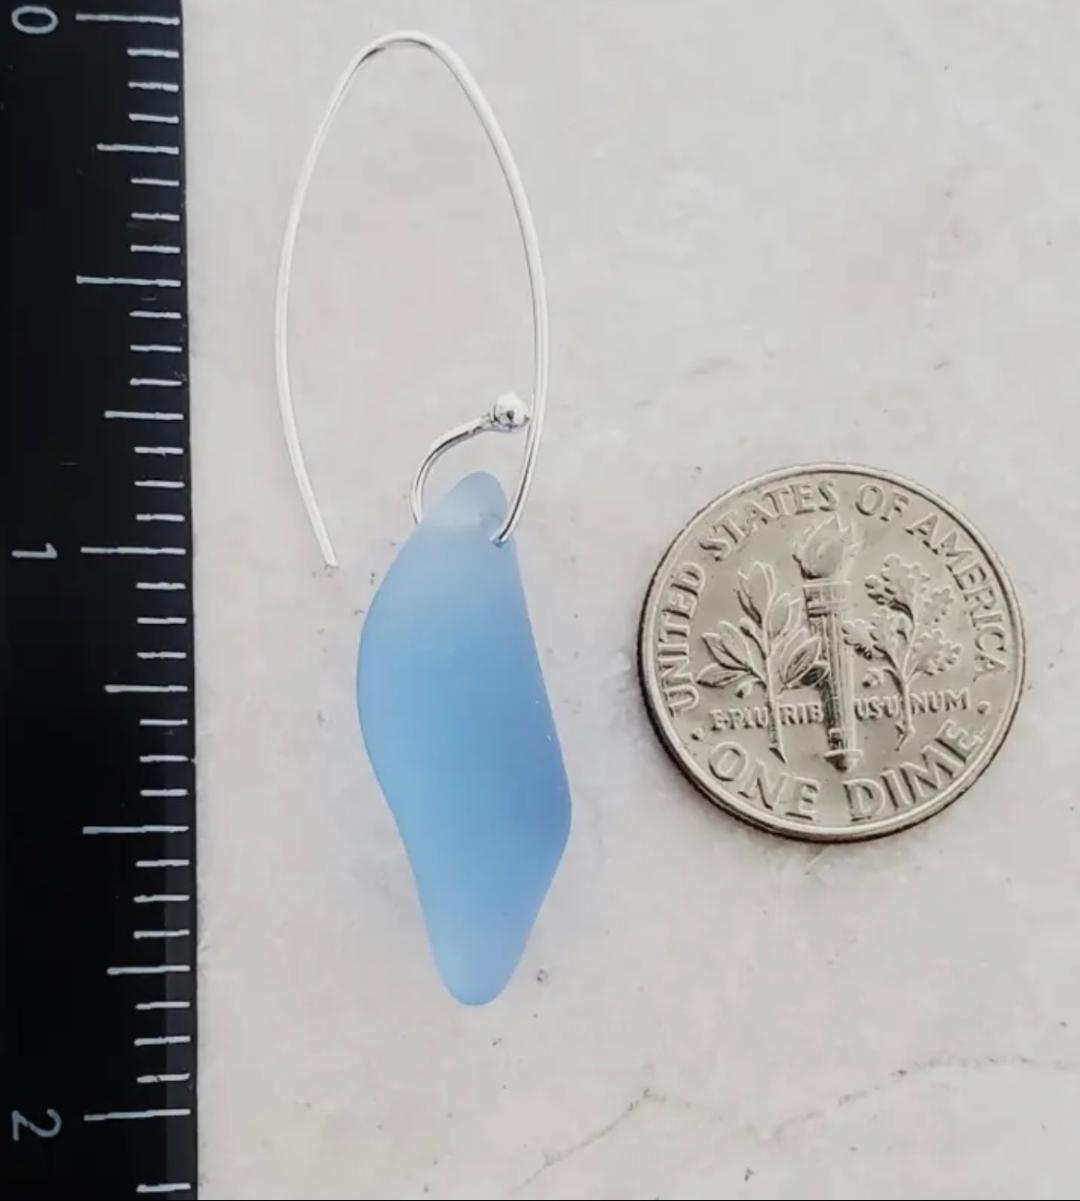 Eco Sea Glass Marquis Splash Earrings - Cornflower Blue